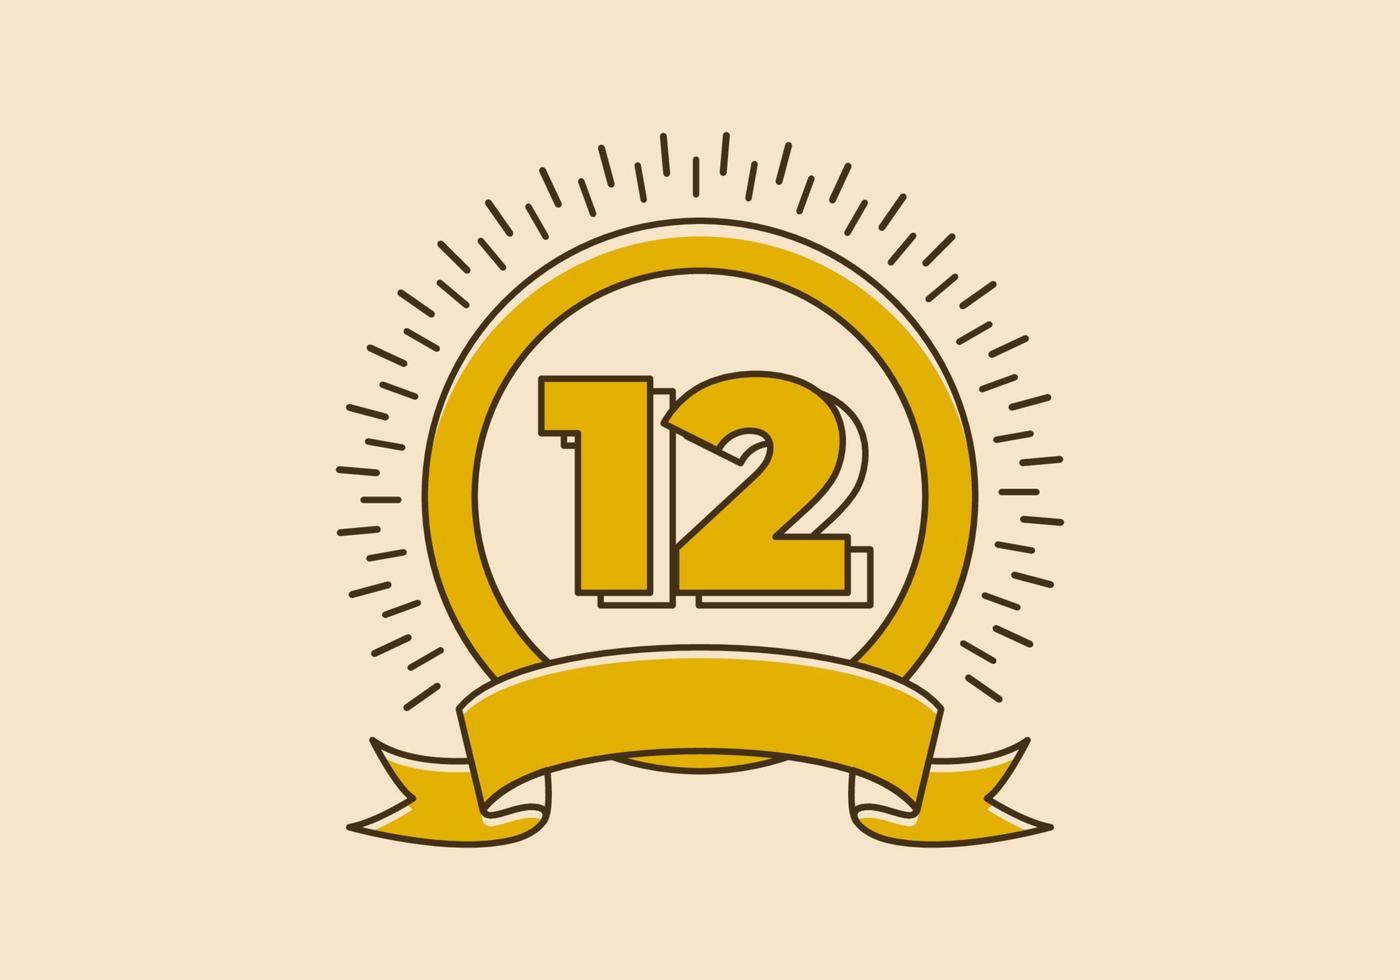 distintivo de círculo amarelo vintage com o número 12 nele vetor